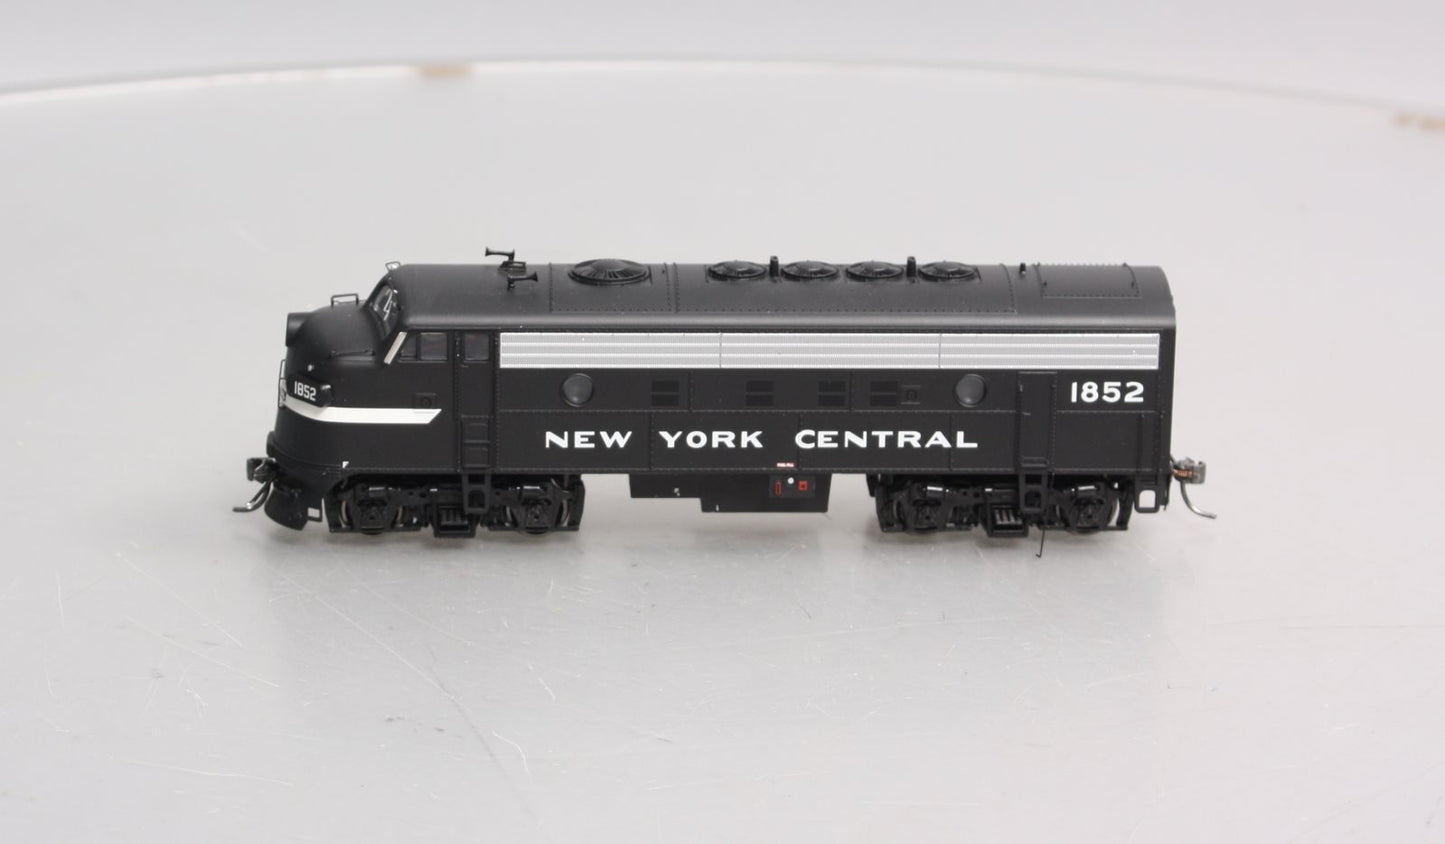 Bowser 24065 HO New York Central EMD F7A Diesel Locomotive #1852 EX/Box